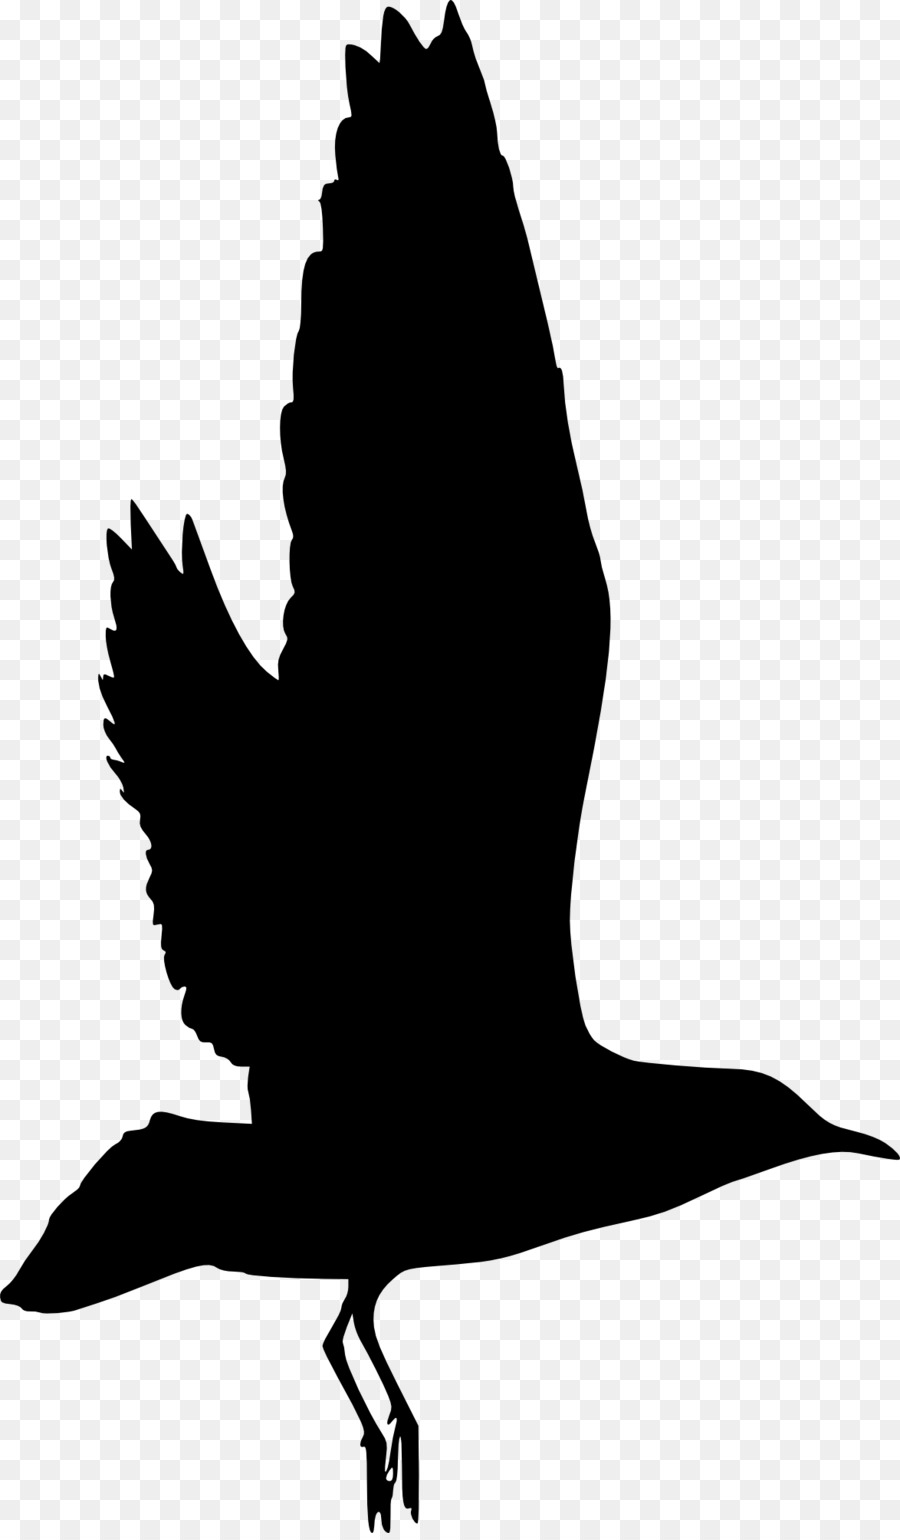 Bird Silhouette Clip art - birds silhouette png download - 1174*2000 - Free Transparent Bird png Download.